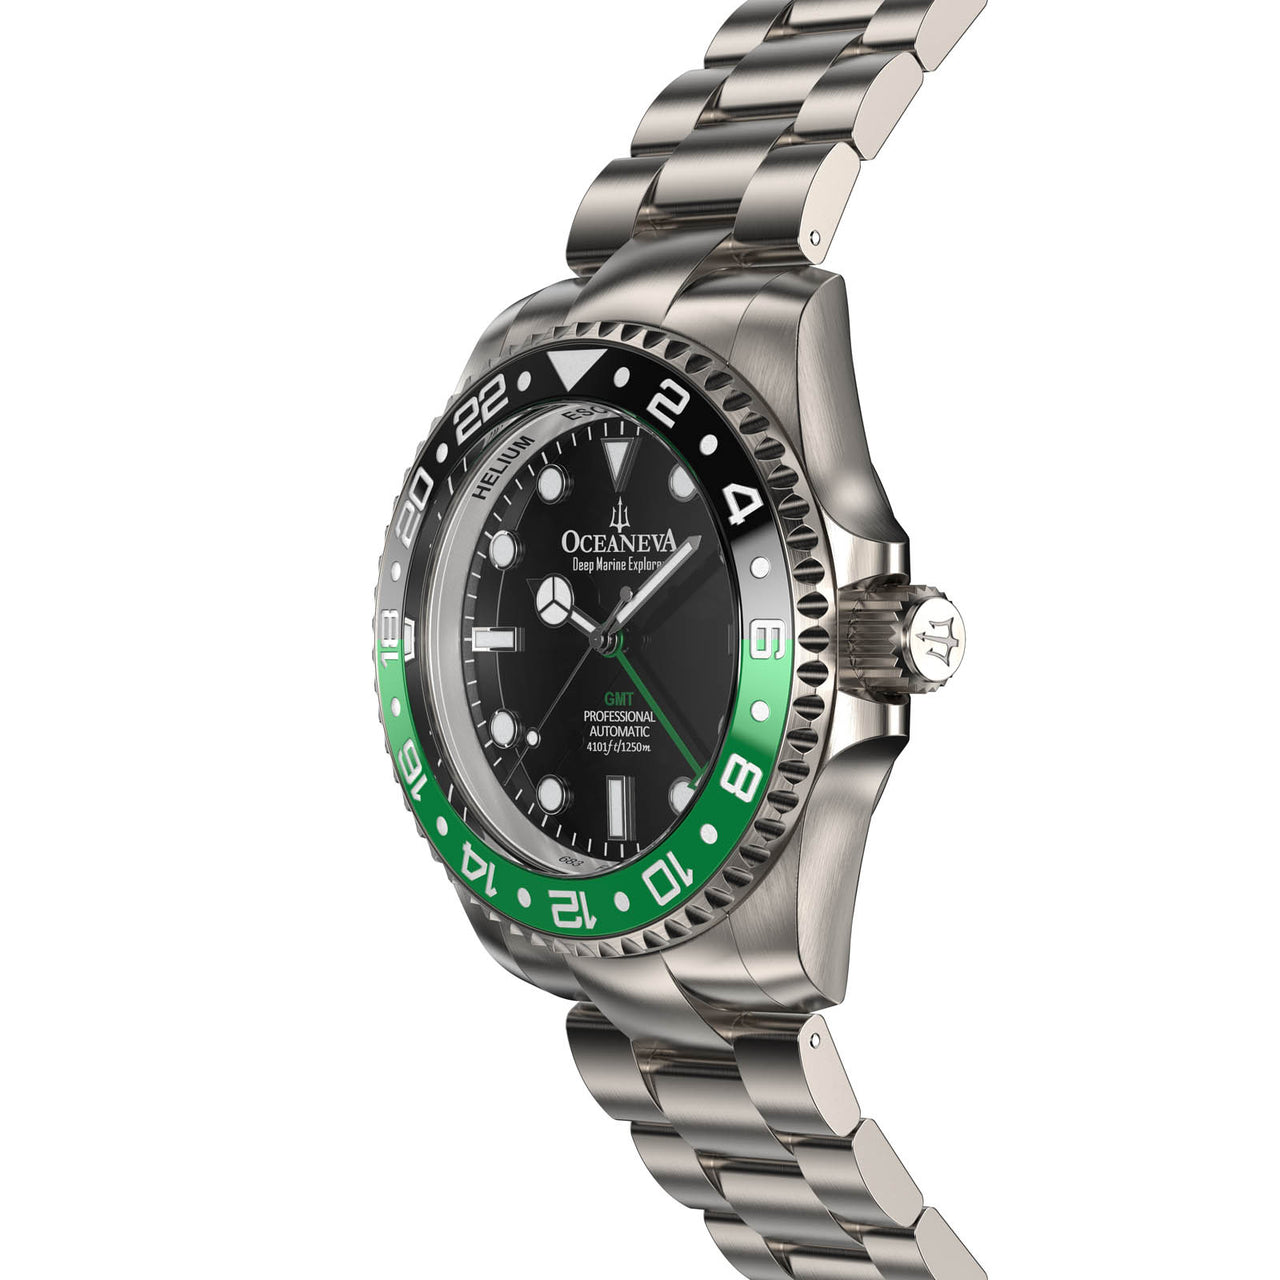 Highly water-resistant Oceaneva Titanium Diver Watch with Helium Escape Valve